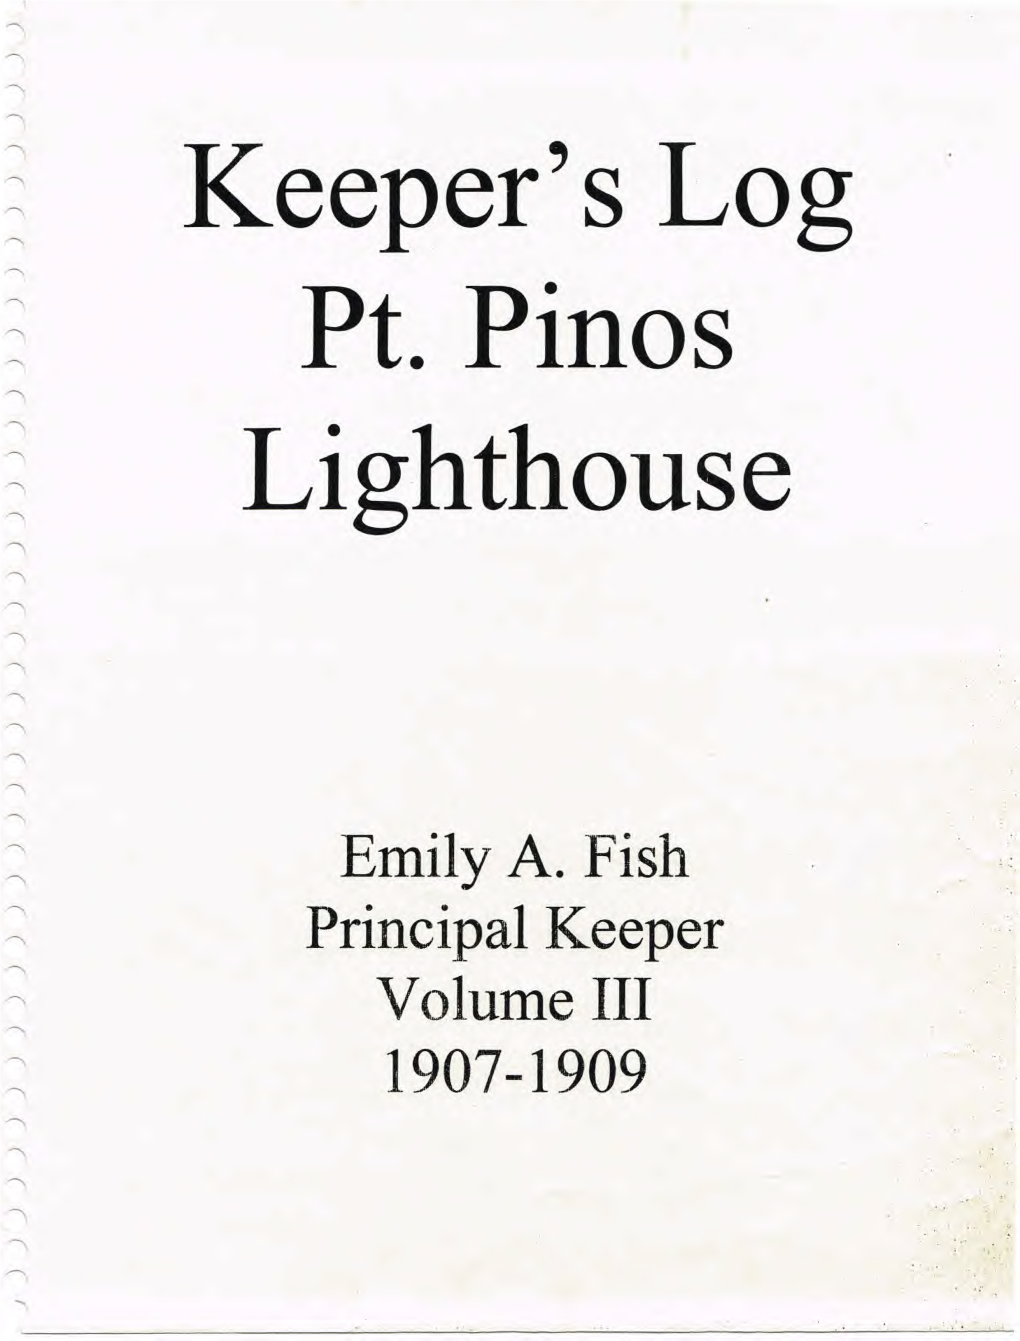 Emily Fish 1907-1909